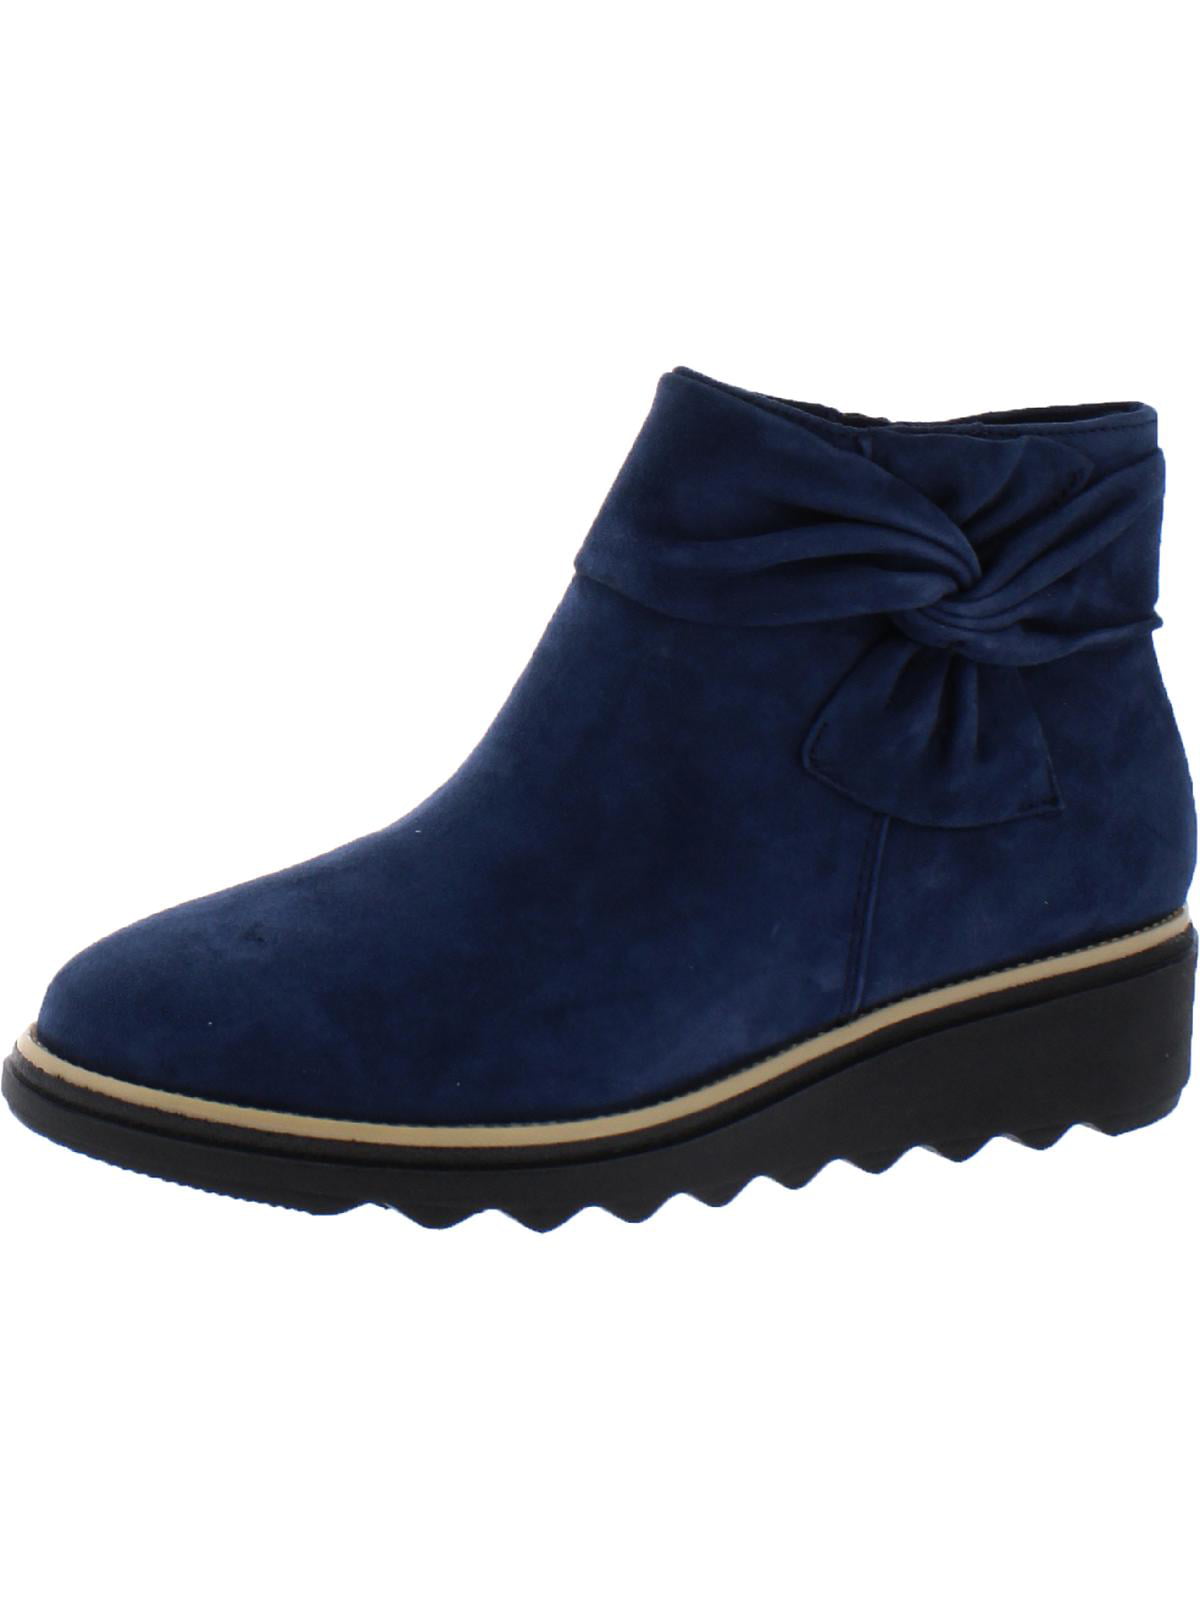 clarks ladies blue suede boots